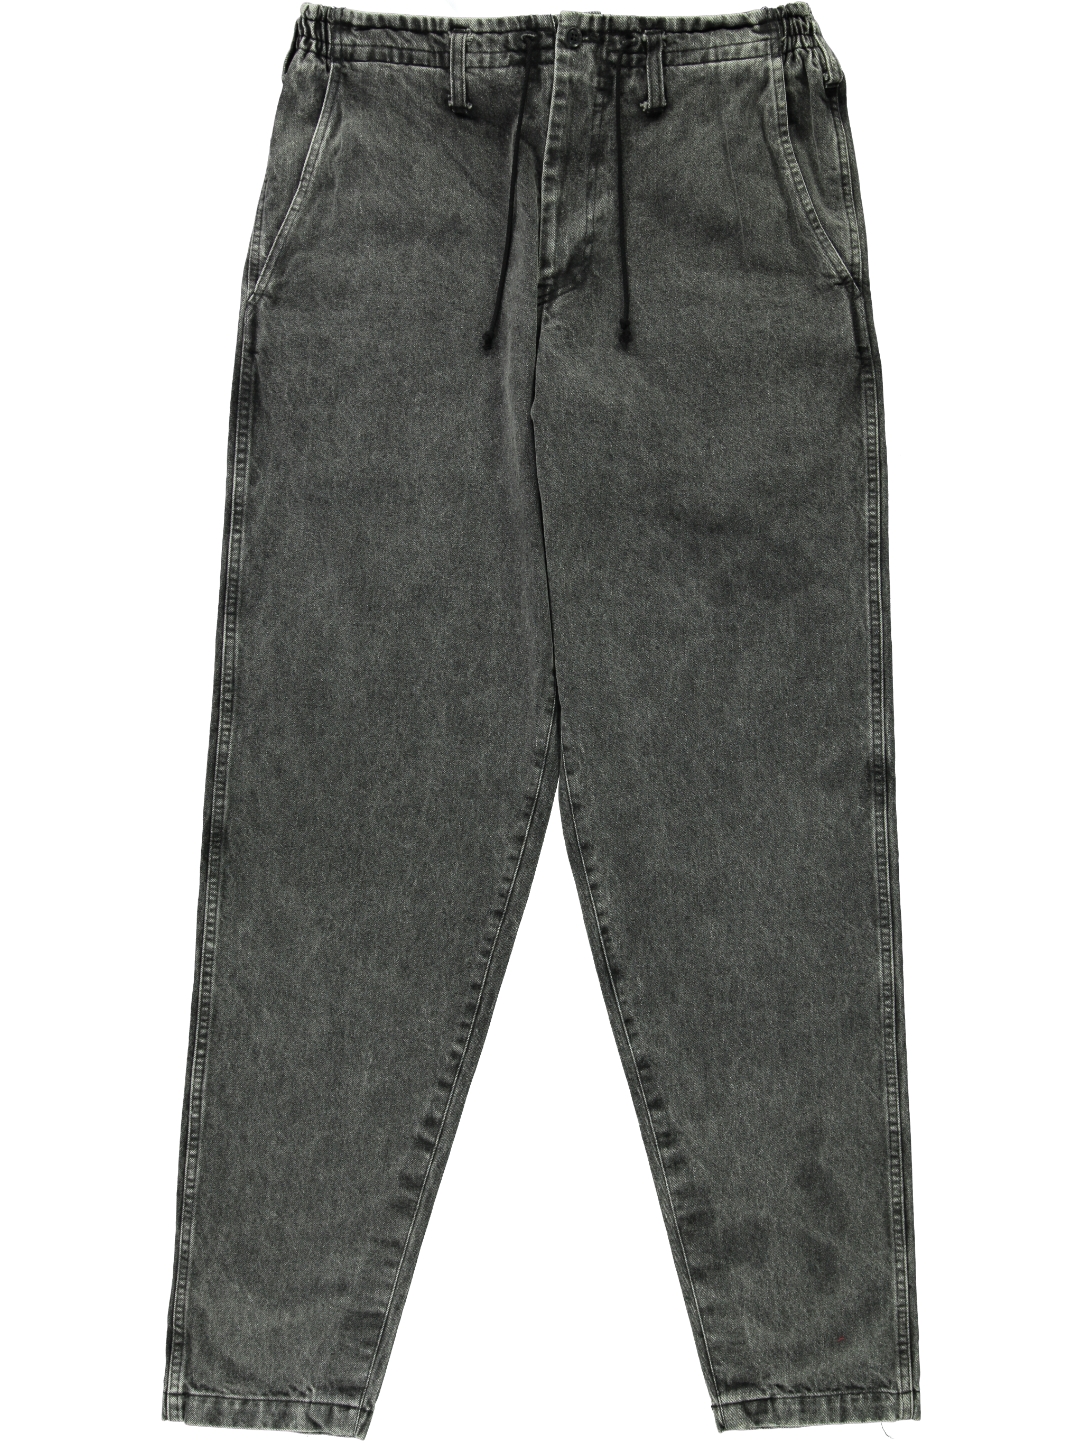 Lyst - Yohji Yamamoto Yohji Yamamoto Mens Pre-washed Jeans in Black for Men